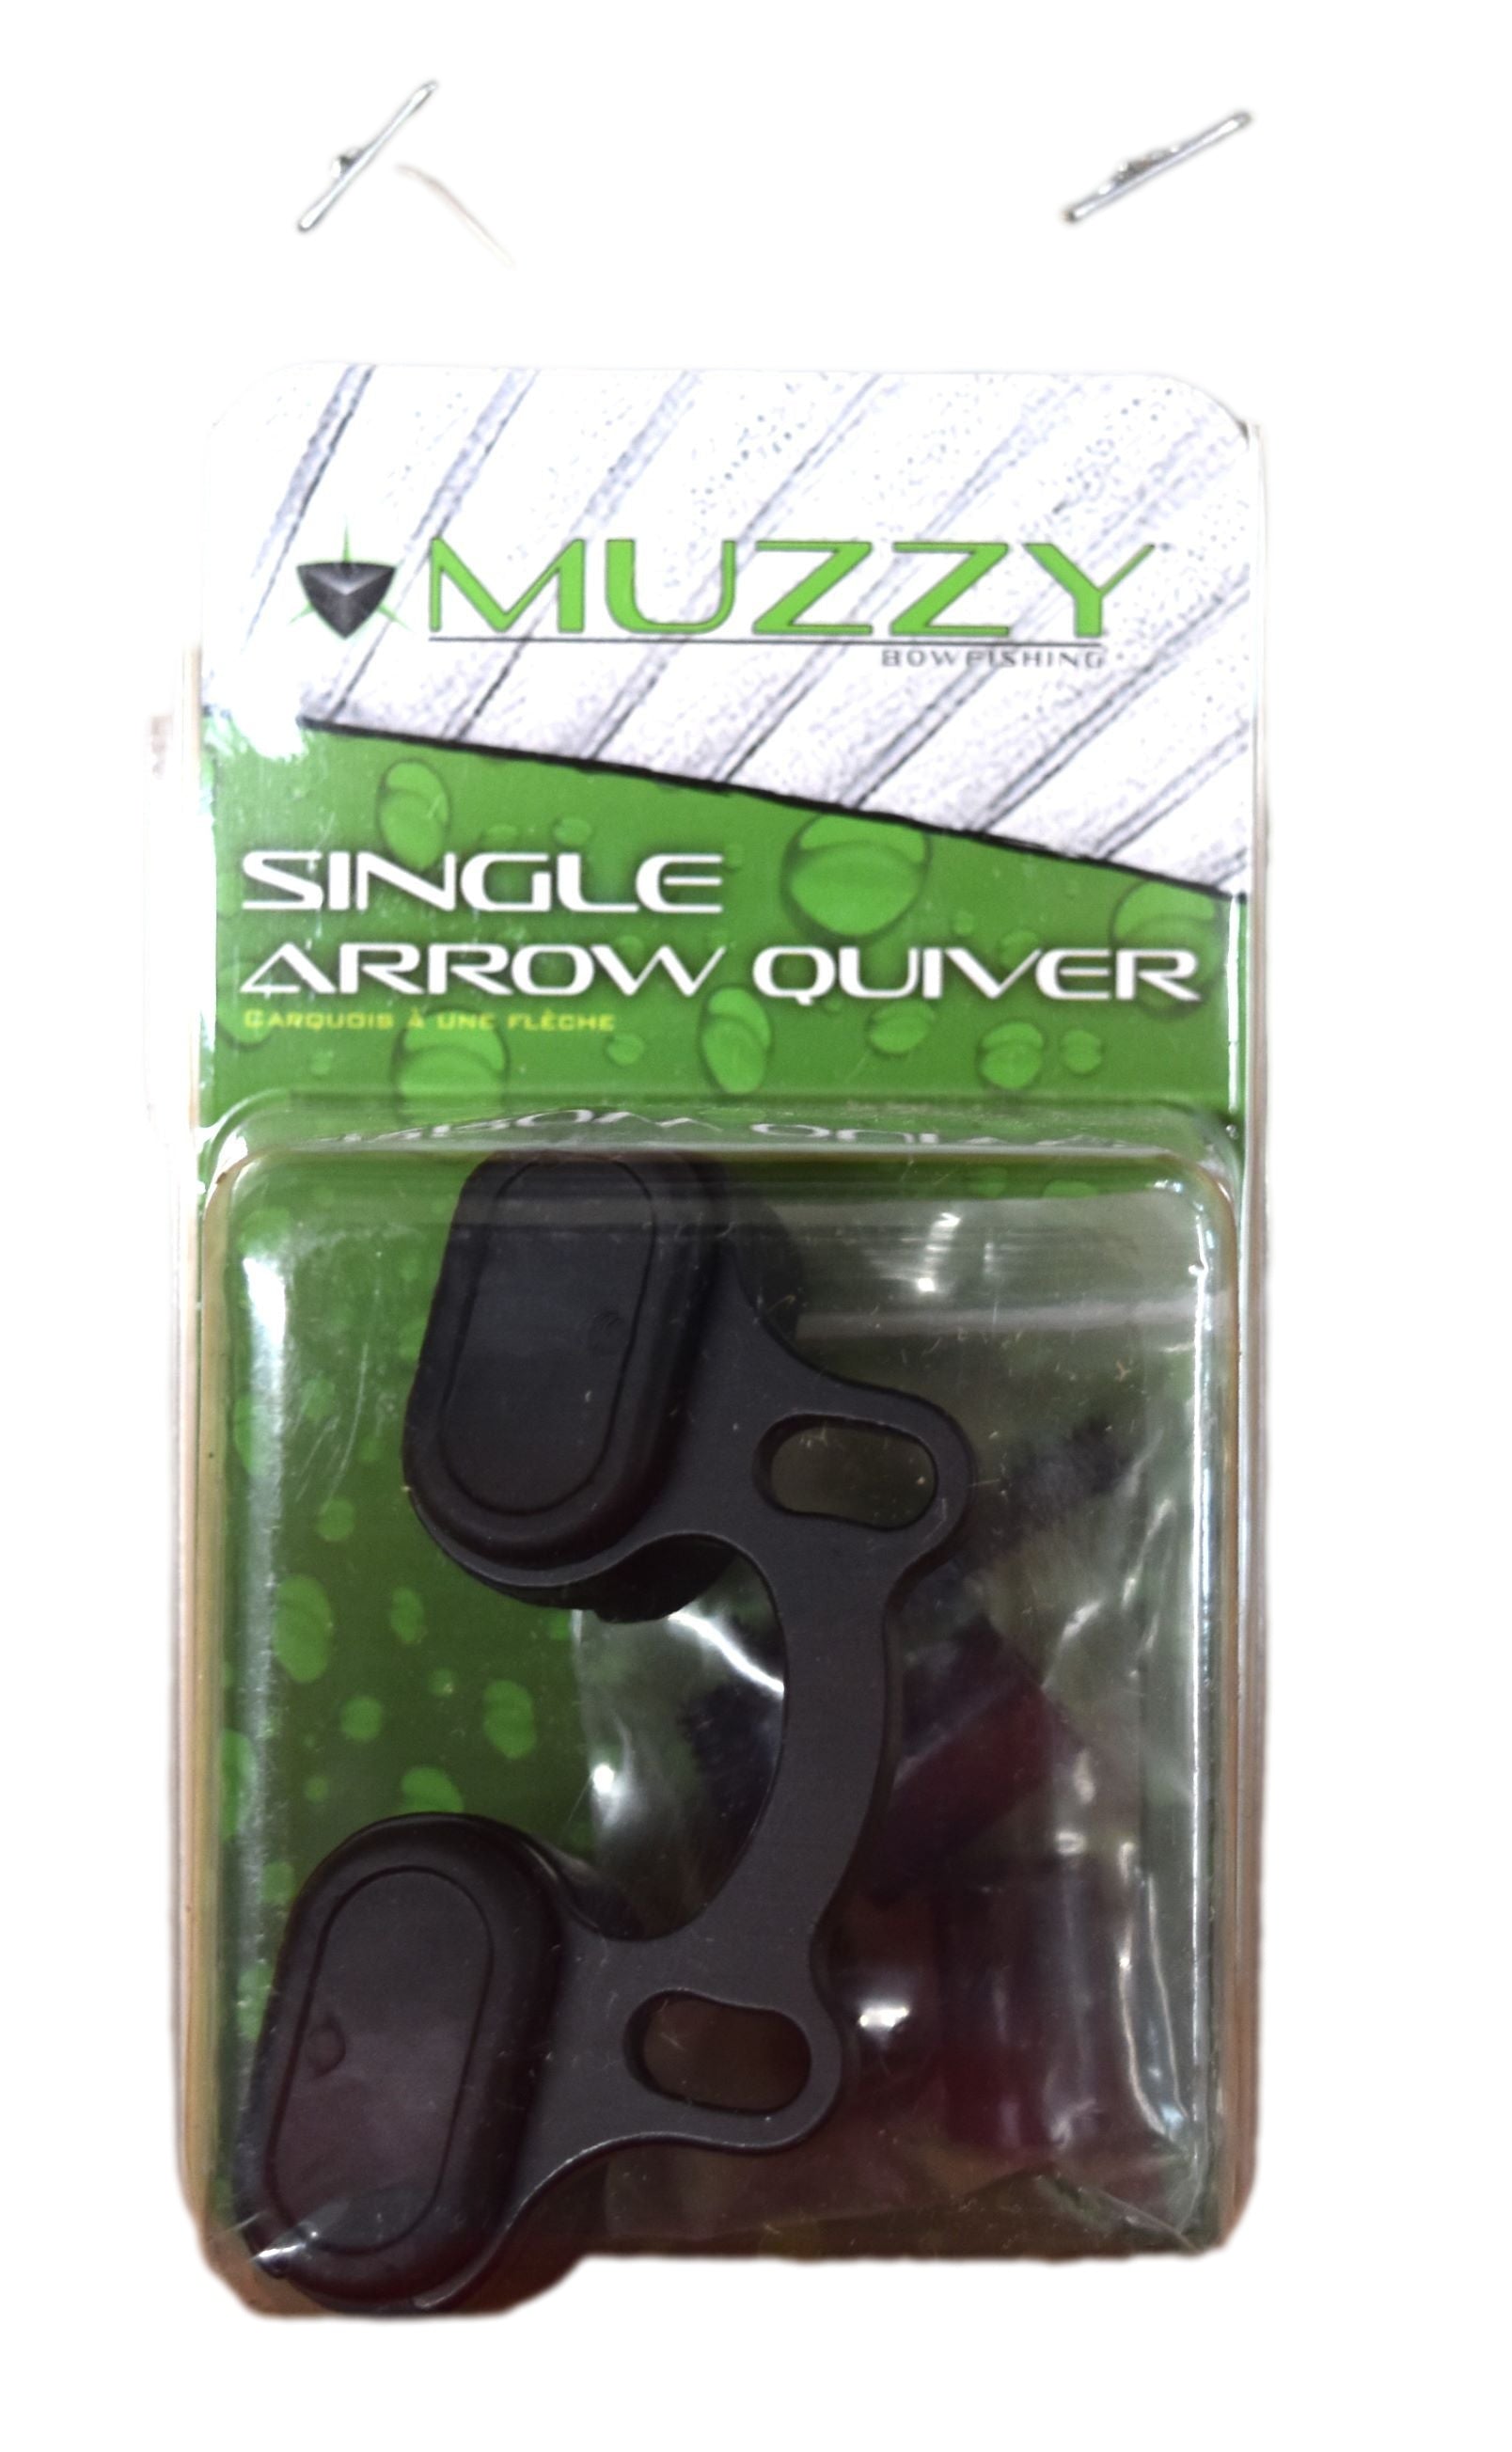 Muzzy Bowfishing Single Arrow Quiver – AZippysale